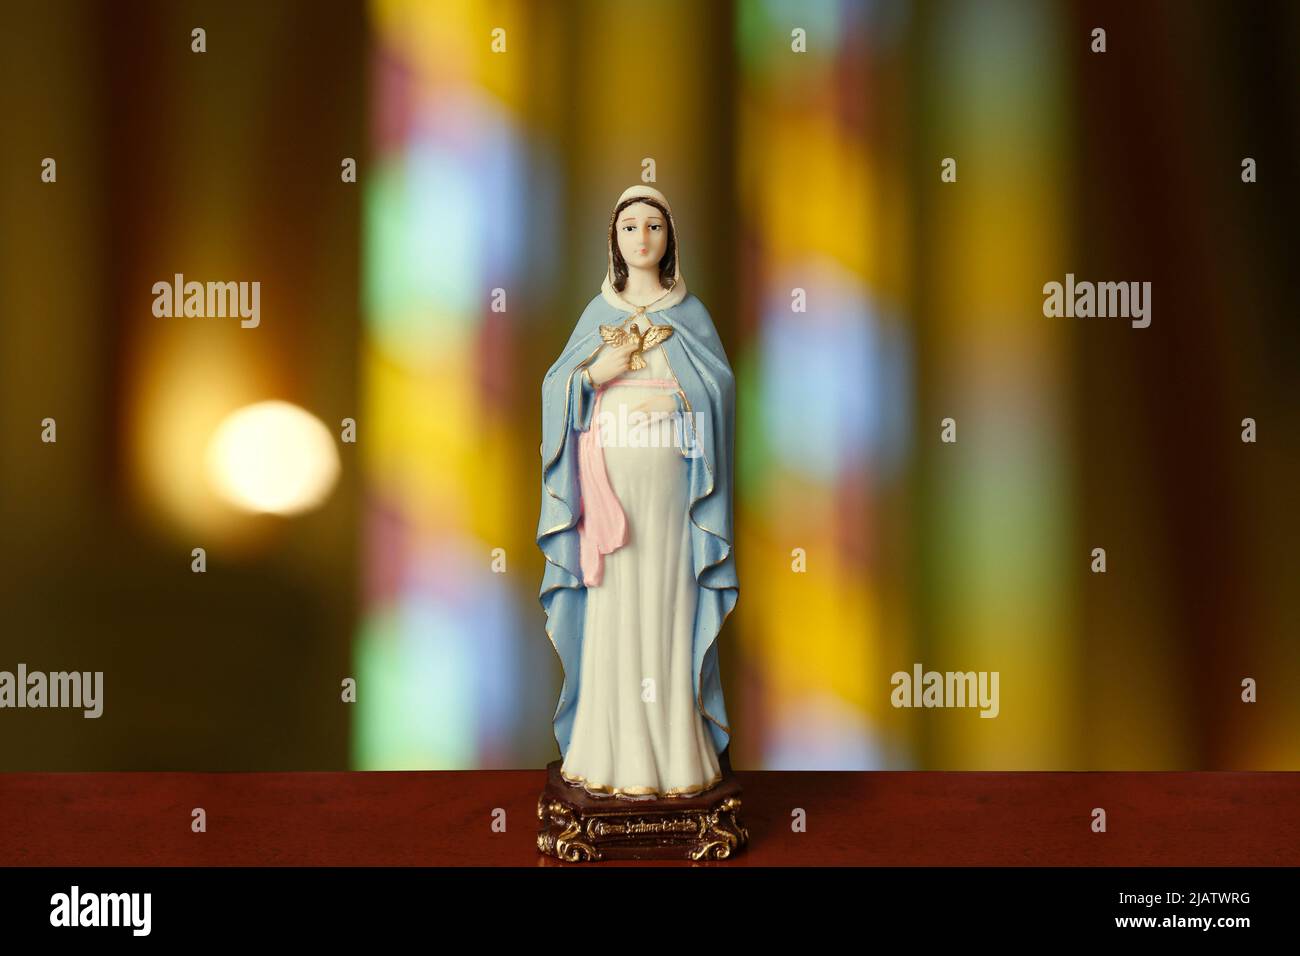 Statue des Bildes unserer Schwangeren, 'Nossa Senhora Gravida', 'Nossa Senhora do O' - Erwartung Stockfoto